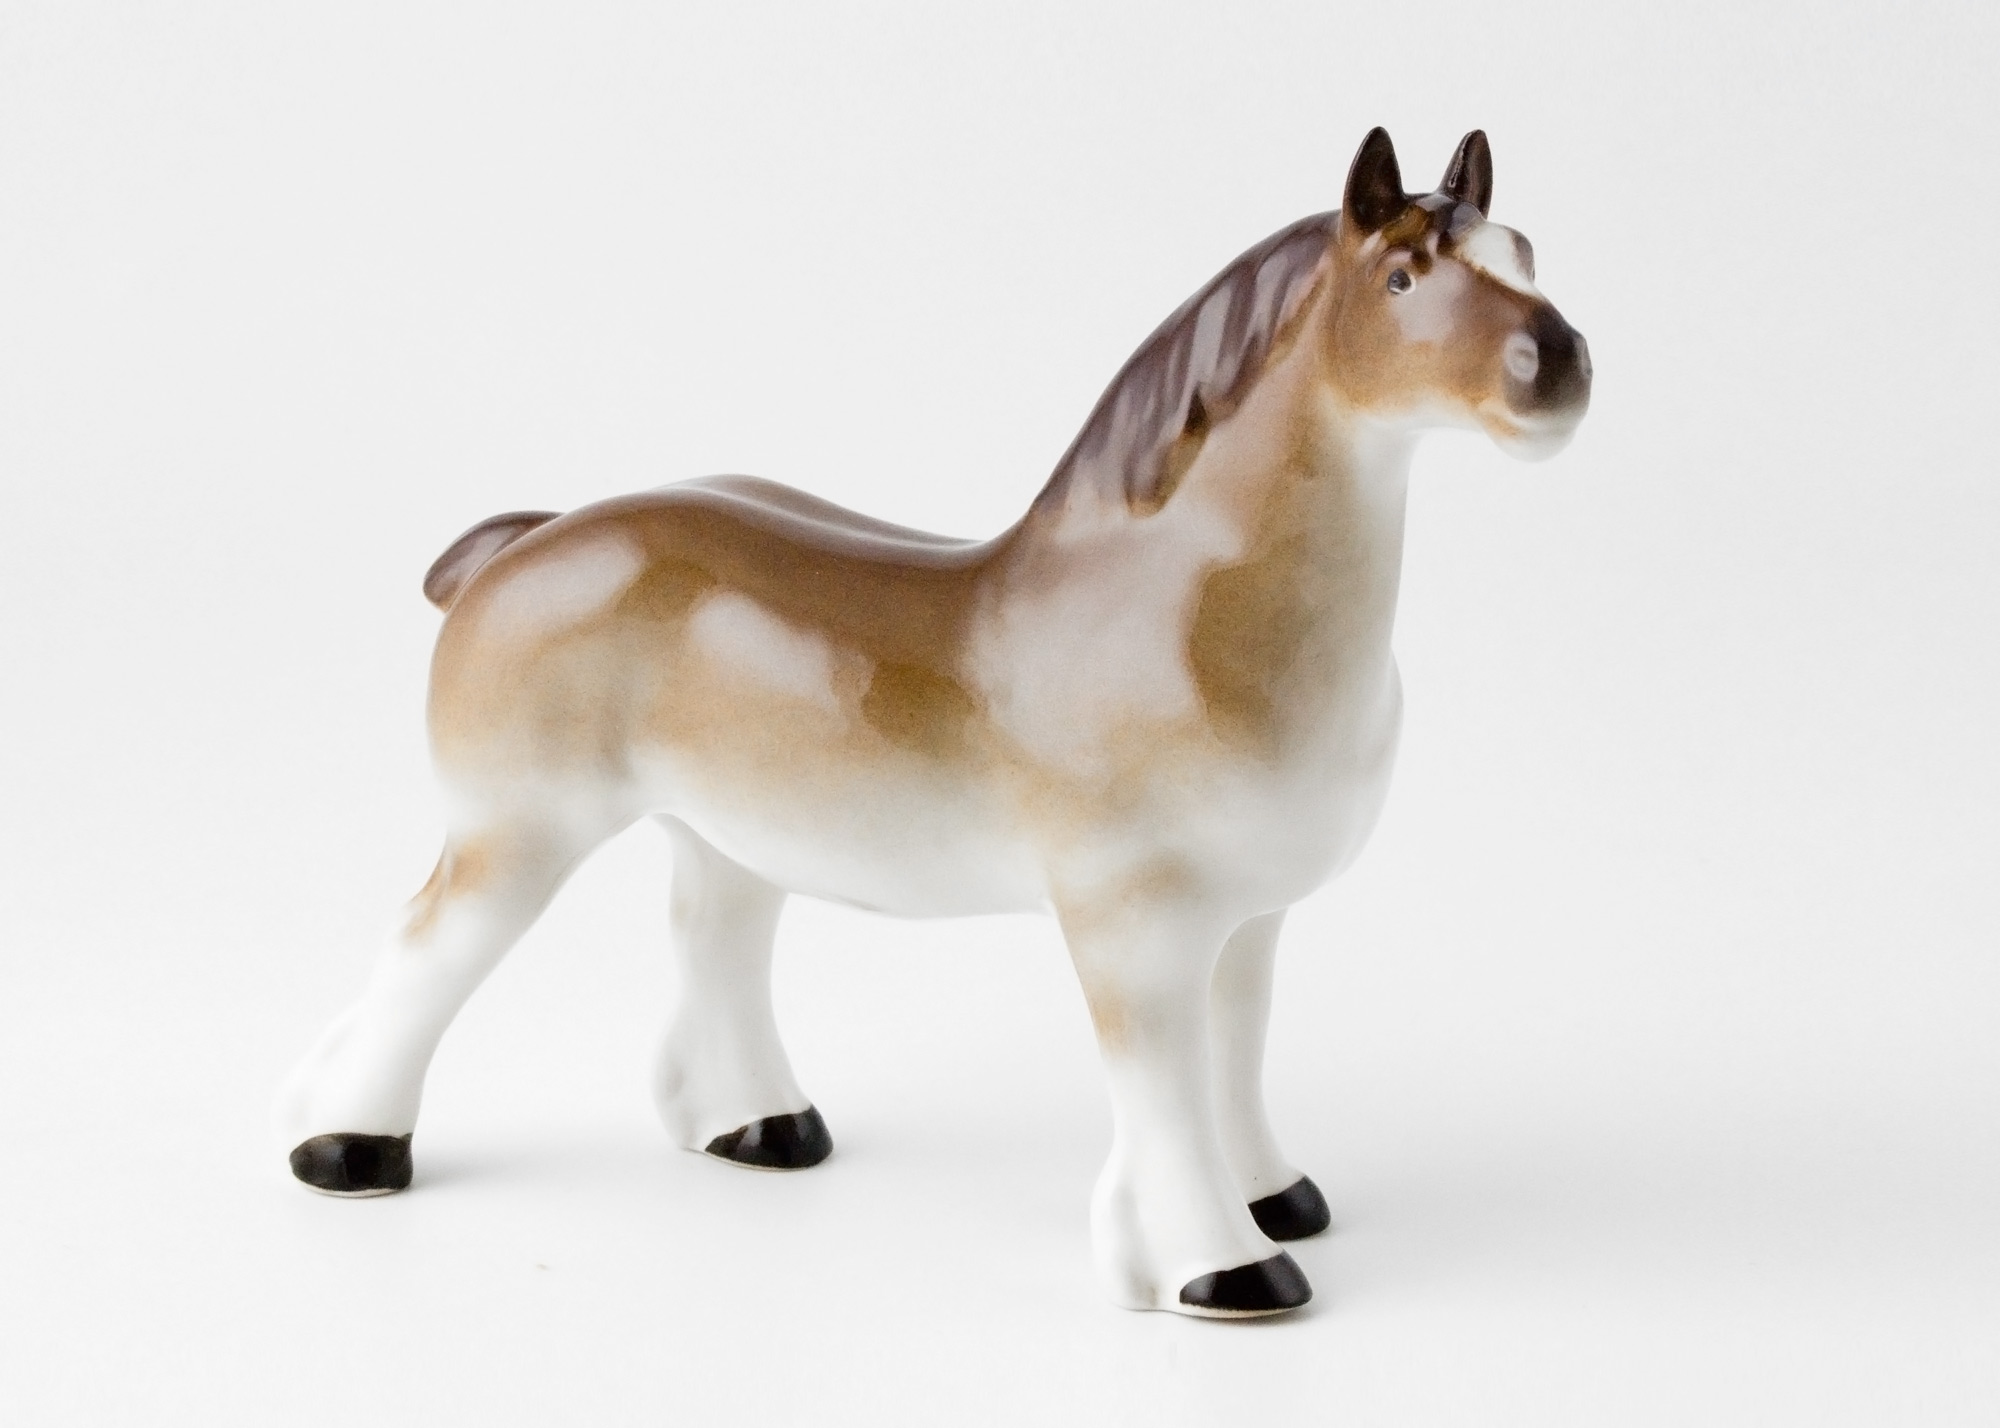 Buy Percheron Horse Figurine at GoldenCockerel.com